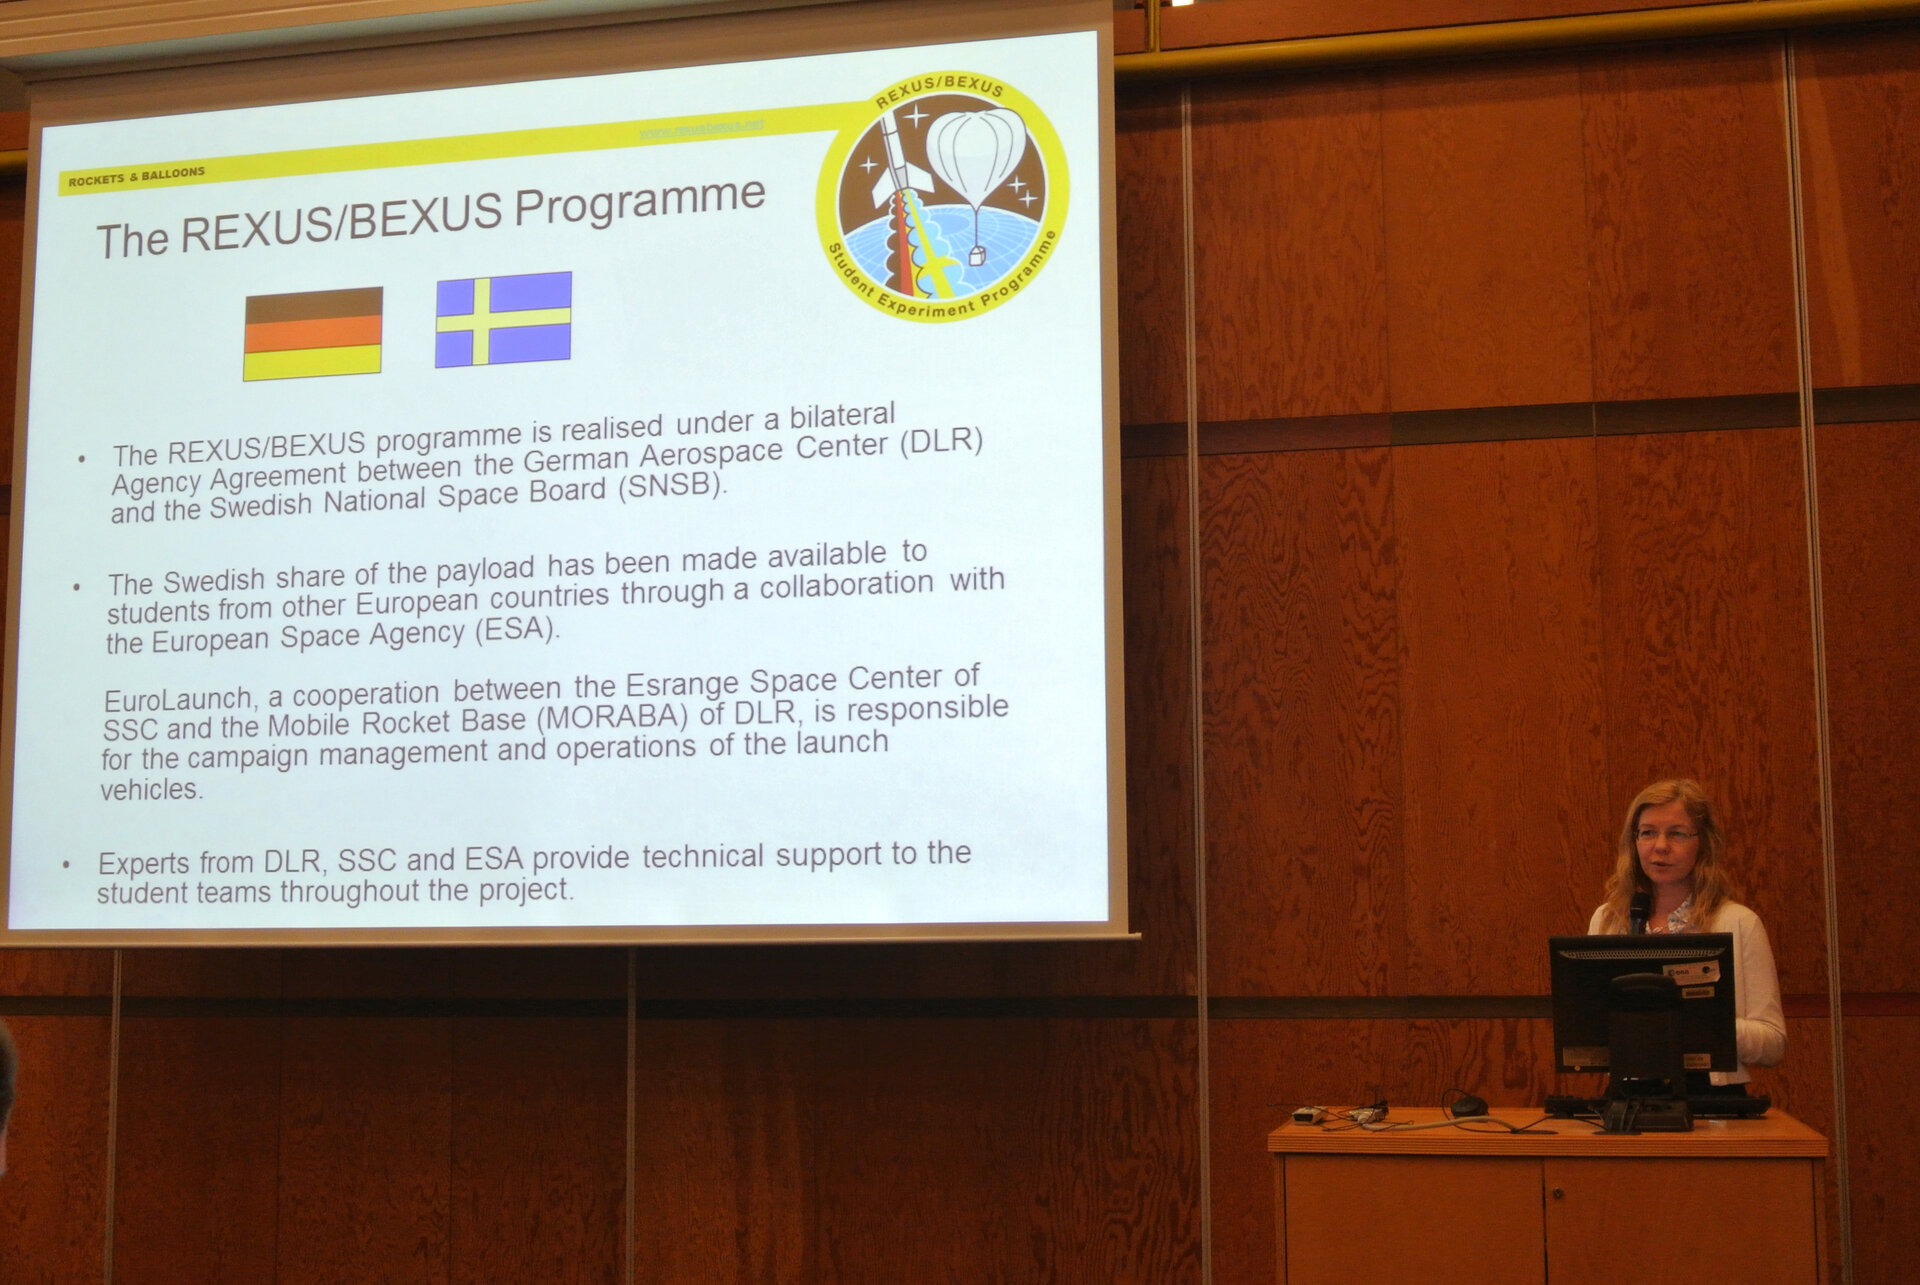 K. Dannenberg (SNSB) presenting organisers of the REXUS & BEXUS programme